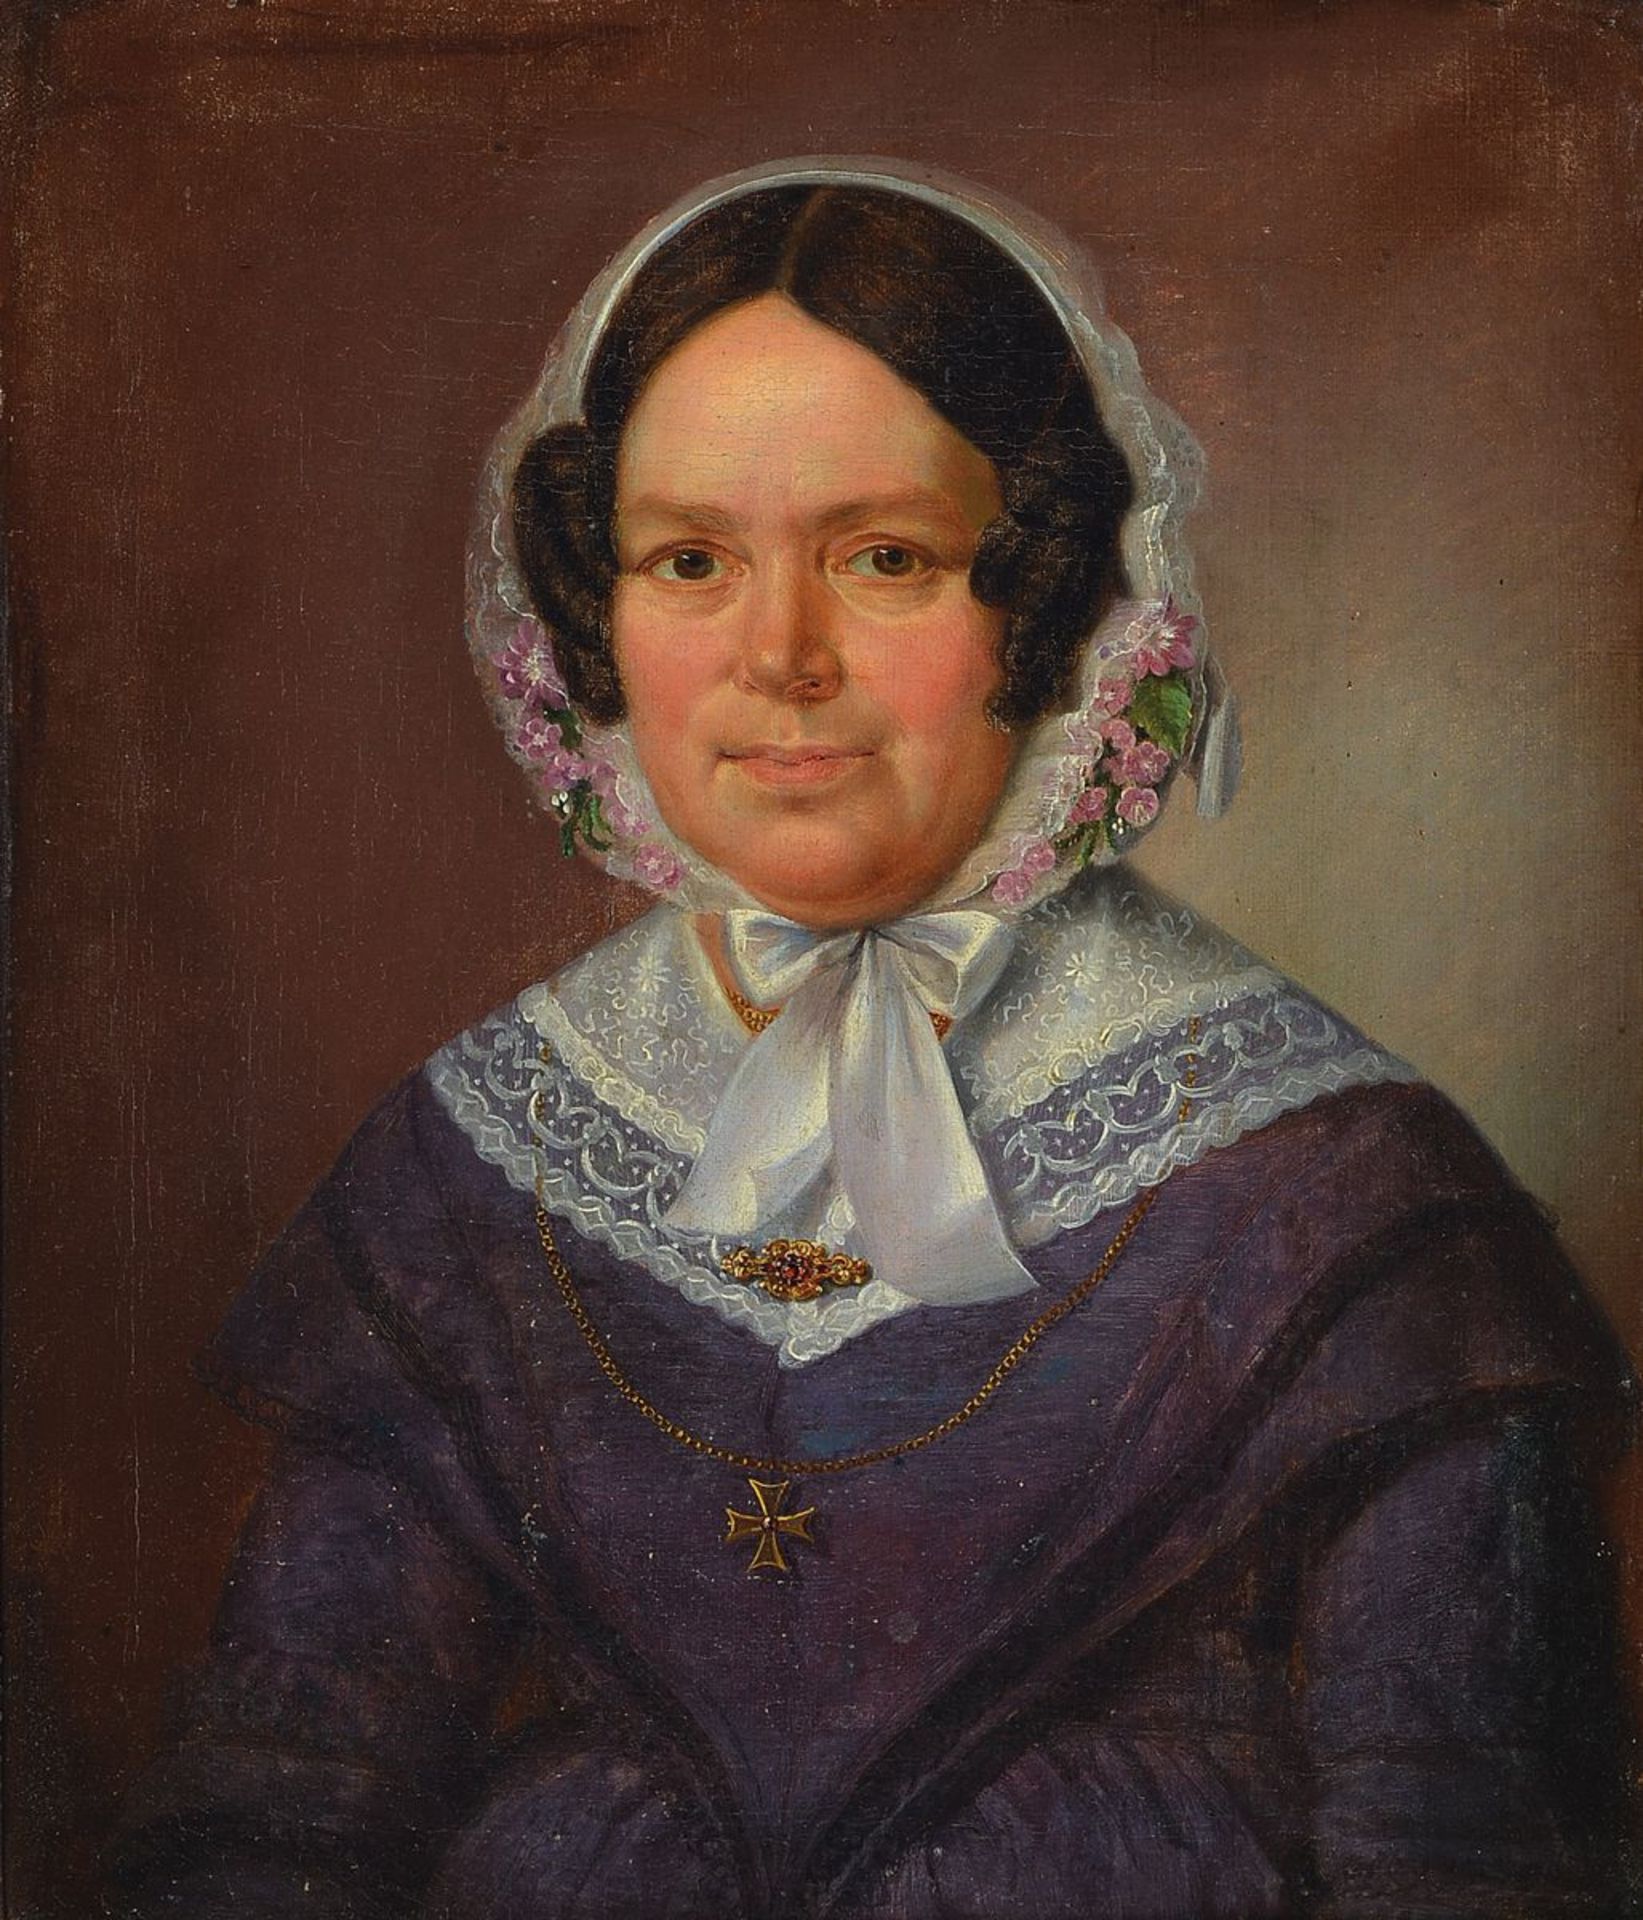 Unidentified artist, dated 1844, portraits of Johann Friedrich Frieß and his wife Caroline Maria,